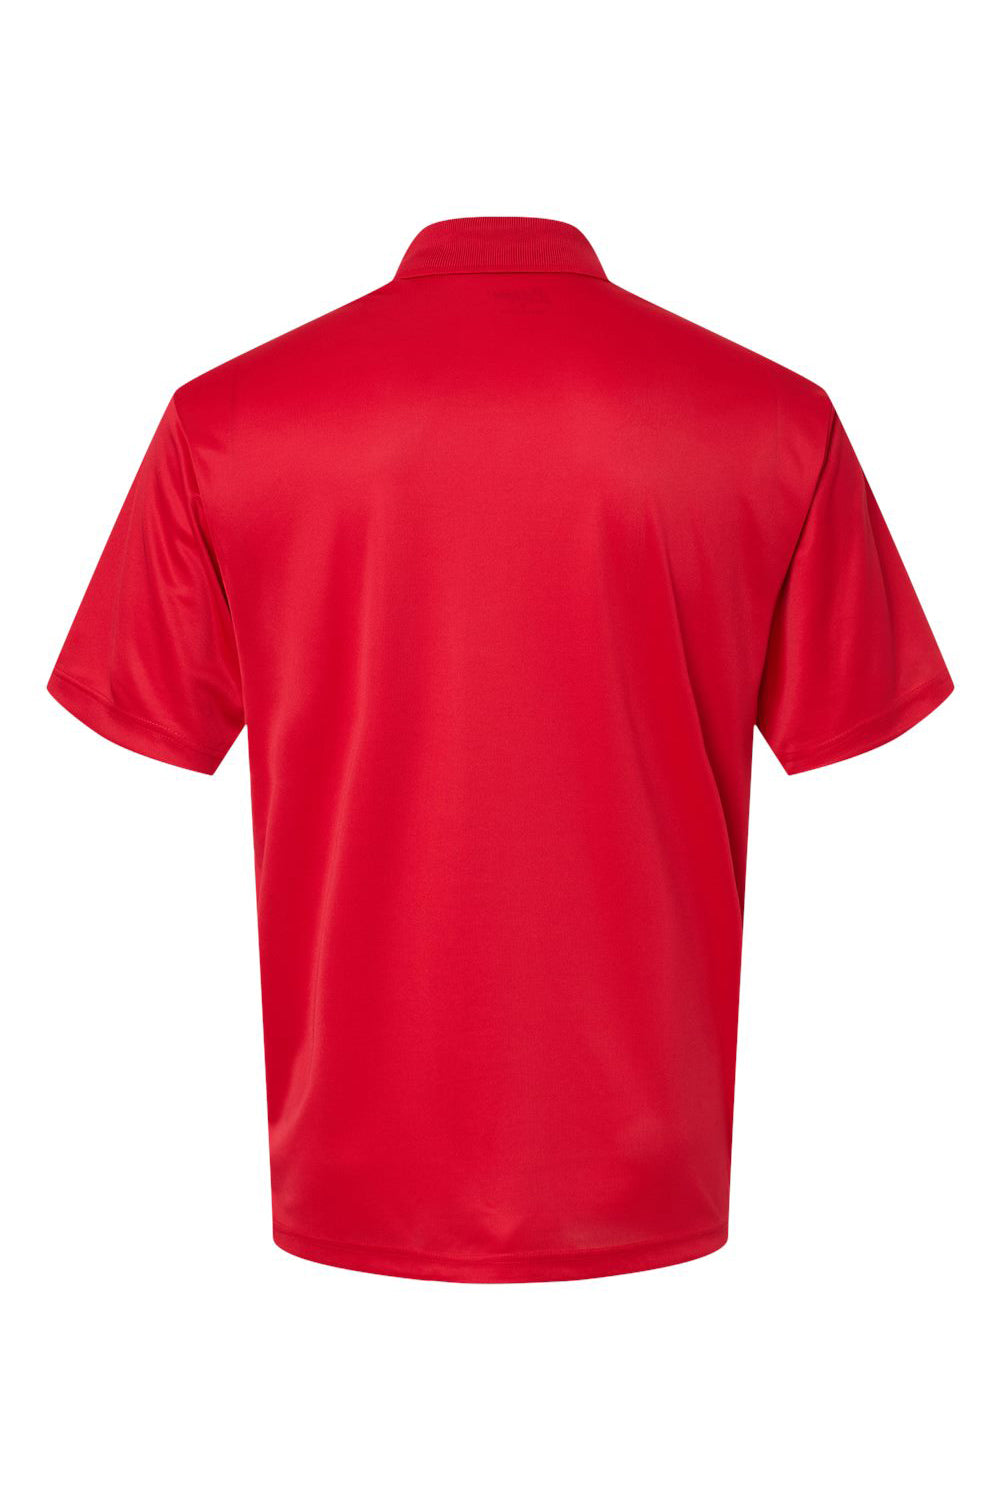 Paragon 500 Mens Sebring Performance Short Sleeve Polo Shirt Deep Red Flat Back